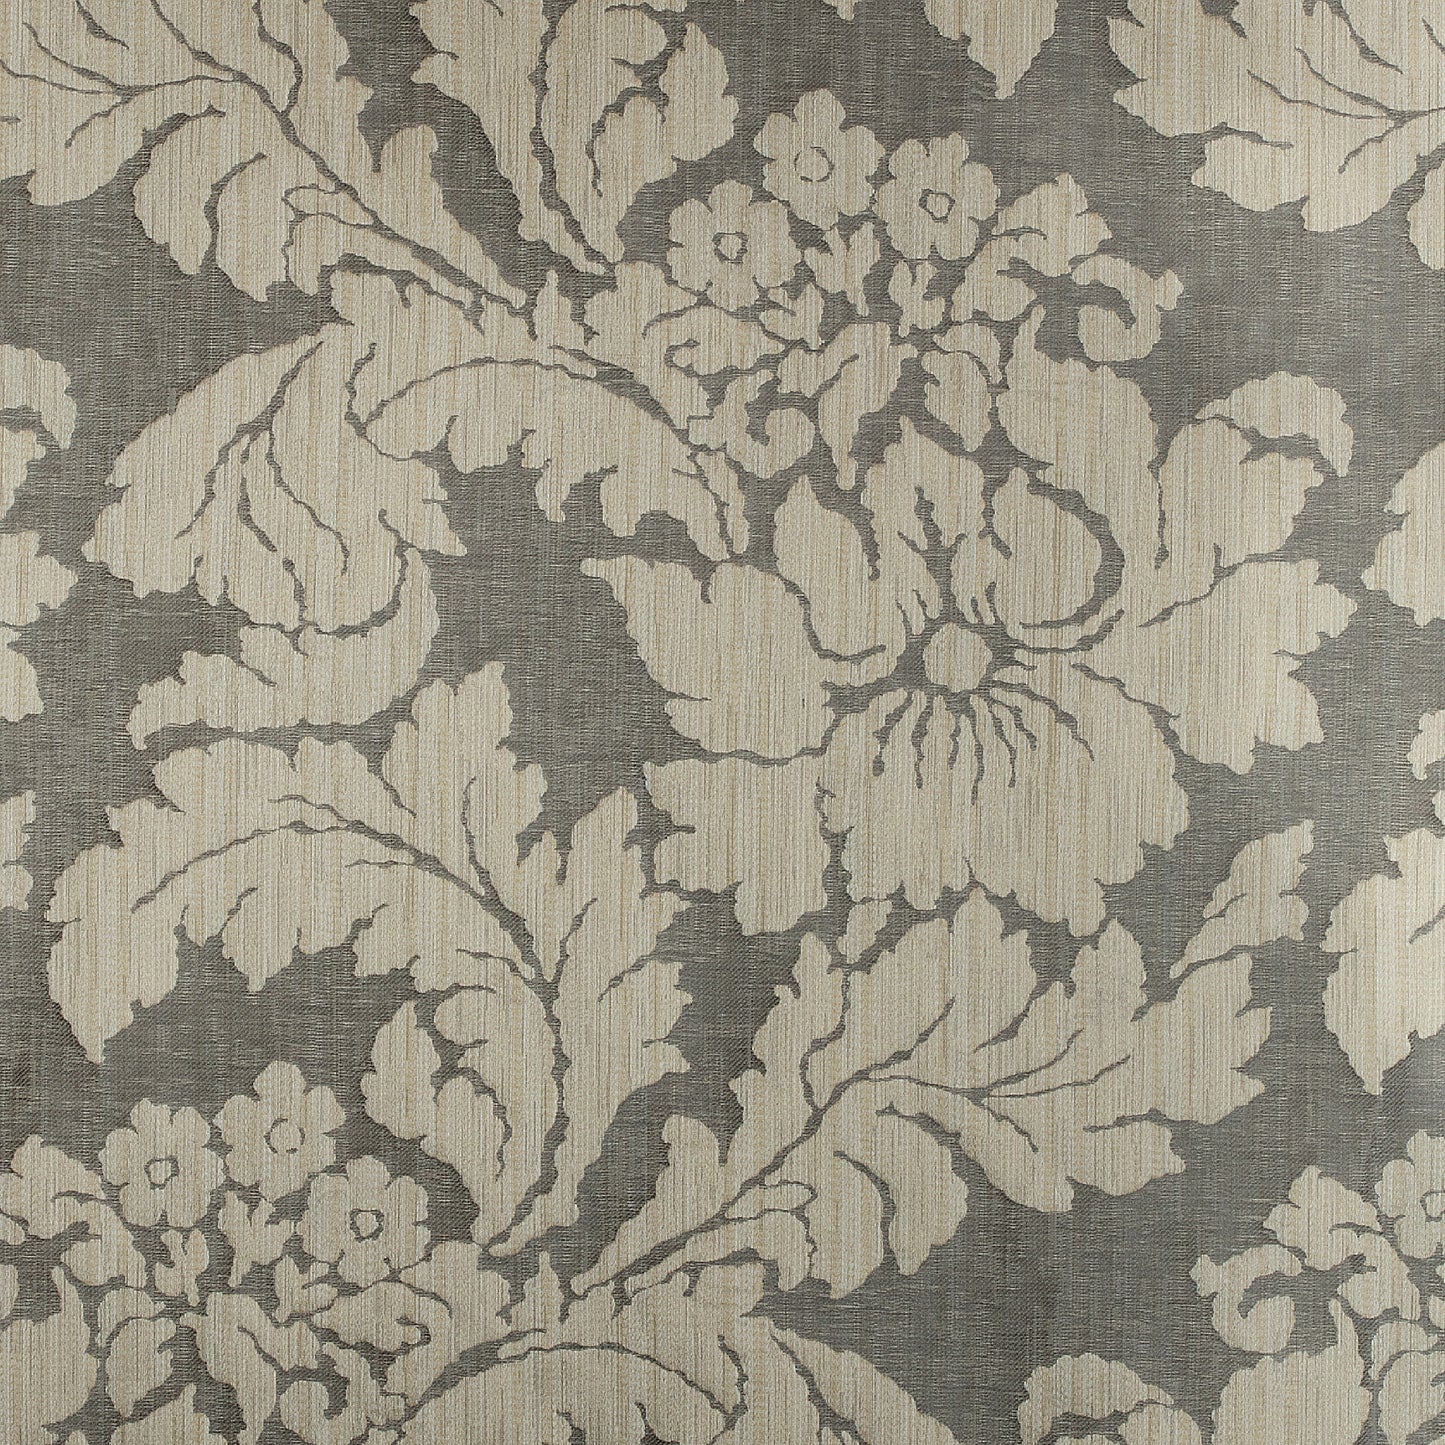 Purchase  Ann French Fabric SKU# AW72979  pattern name  Caserta Damask